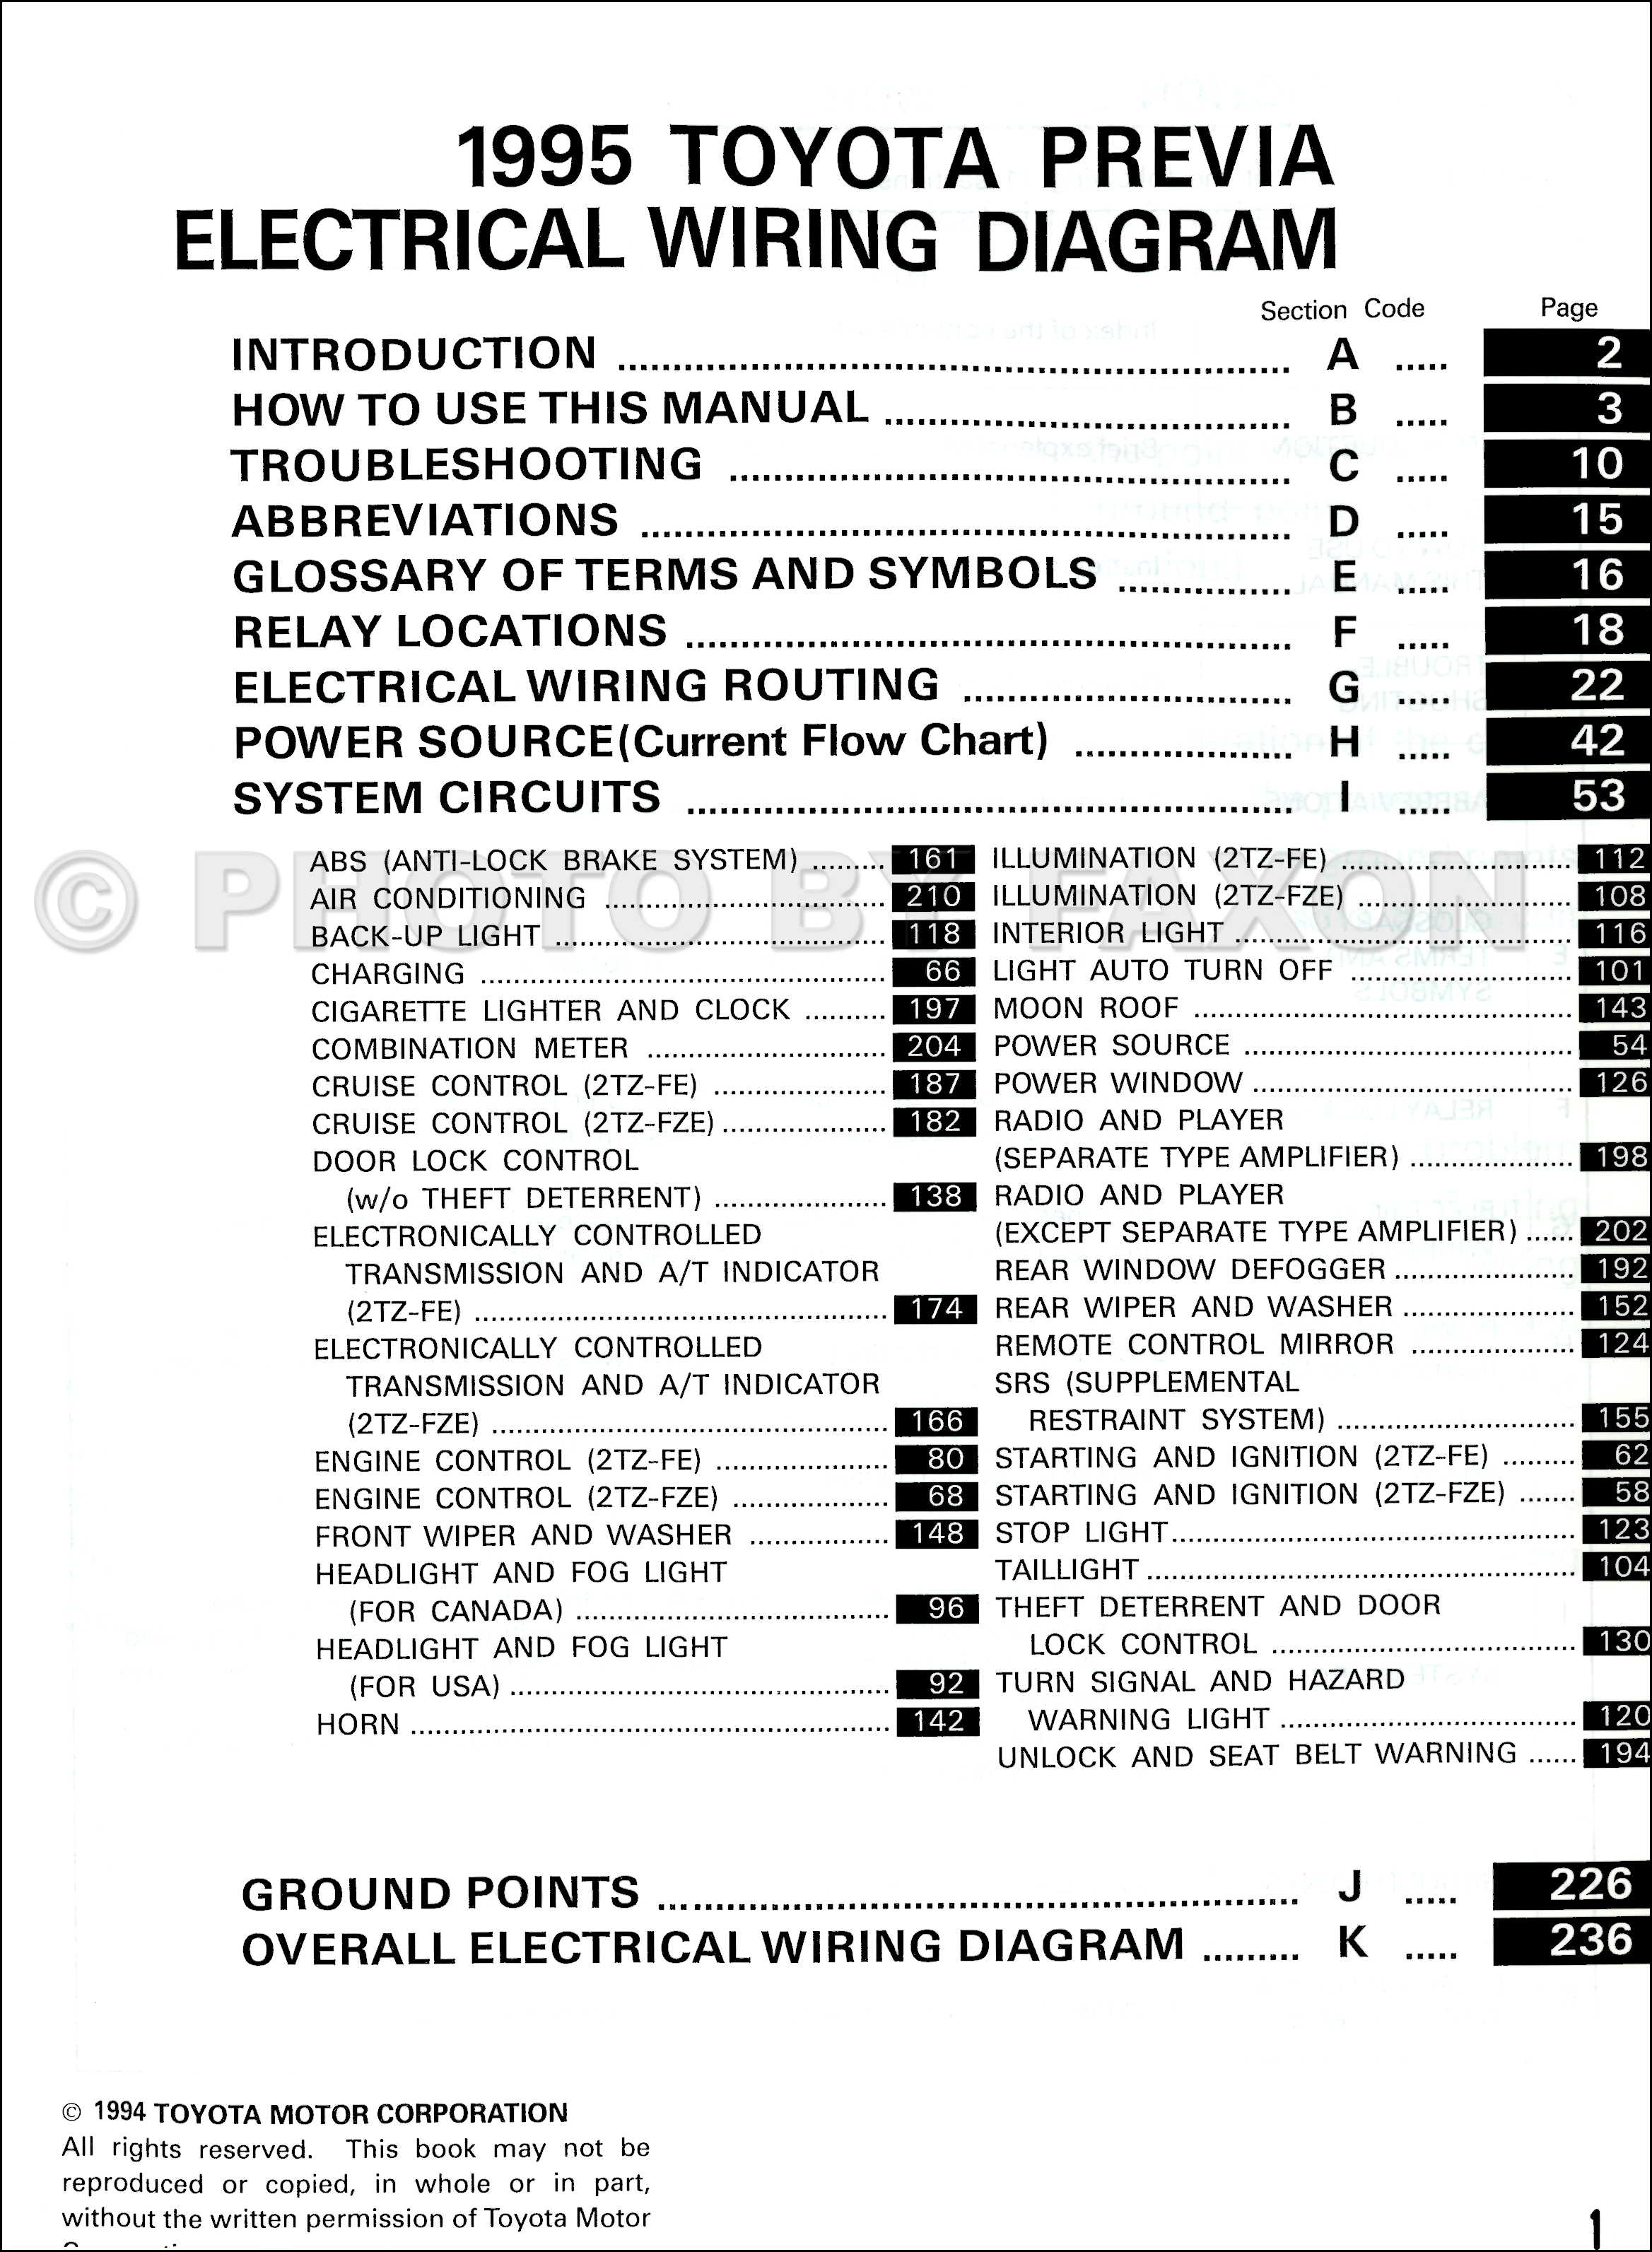 Diagram 2002 Toyota Celica Wiring Diagram Manual Original Full Version Hd Quality Manual Original Ringdoorbellwiringdiagram Arthys Fr